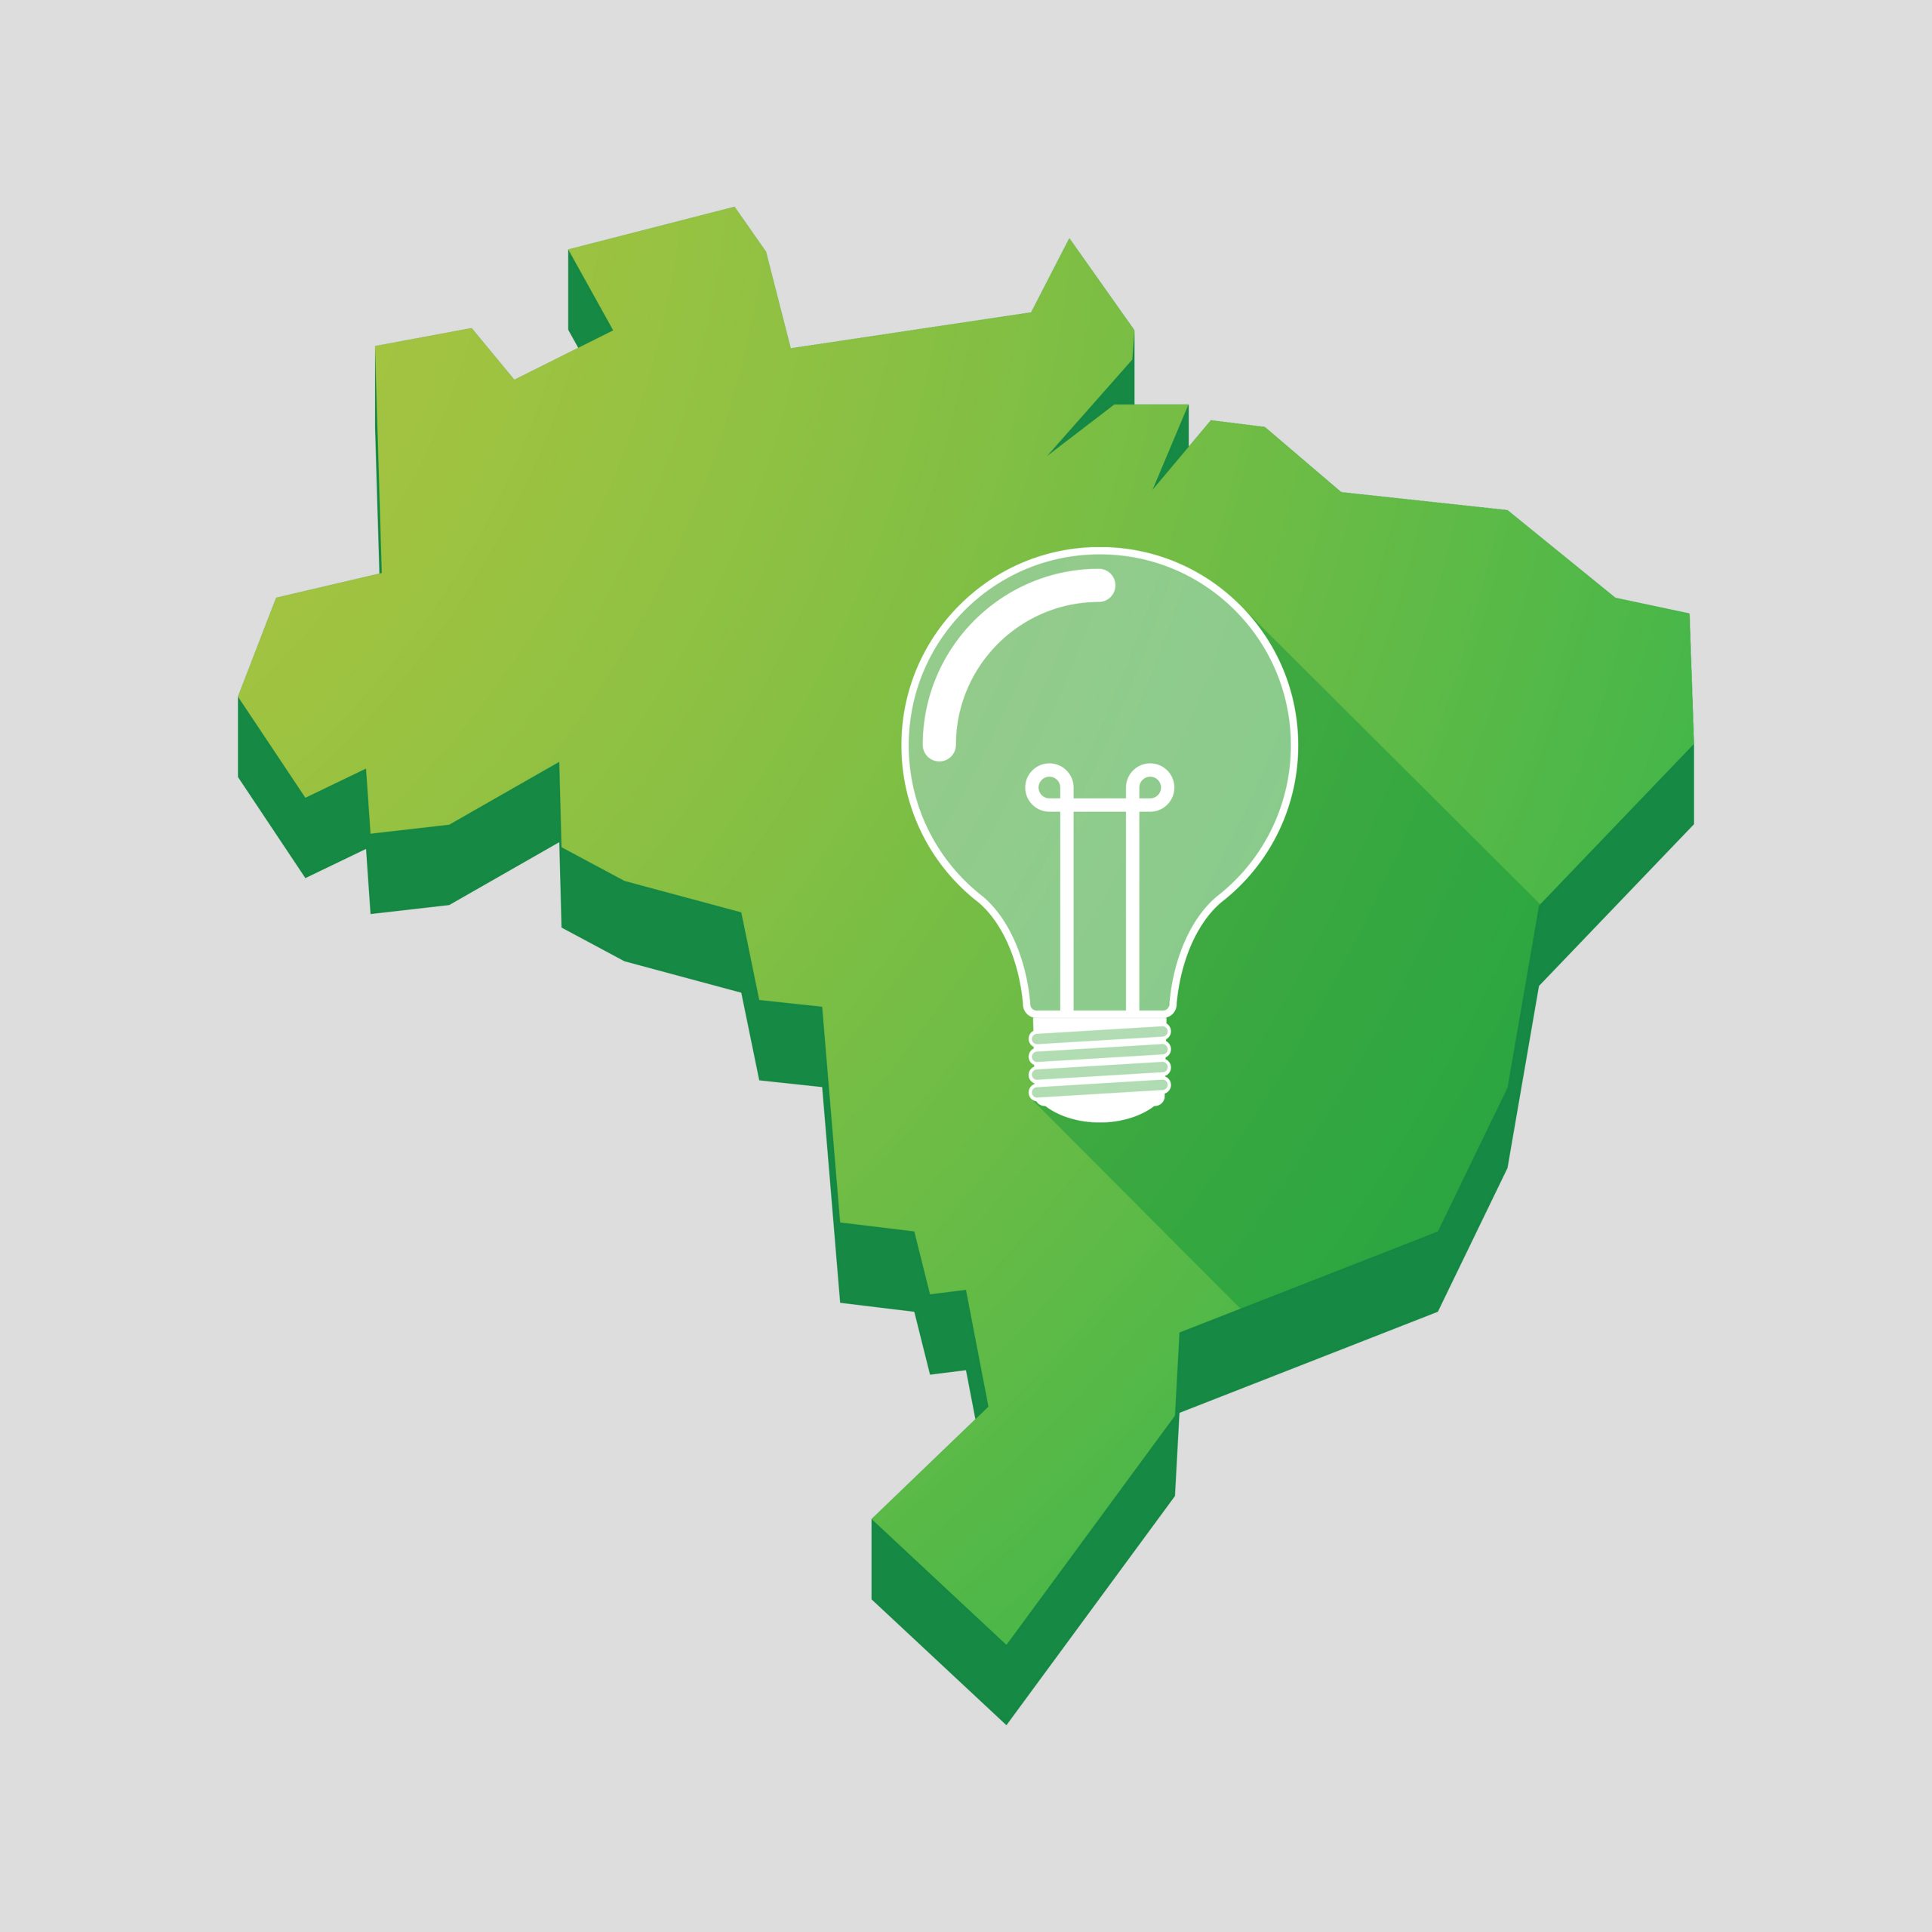 https://depositphotos.com/66080873/stock-illustration-green-brazil-map-with-a.html